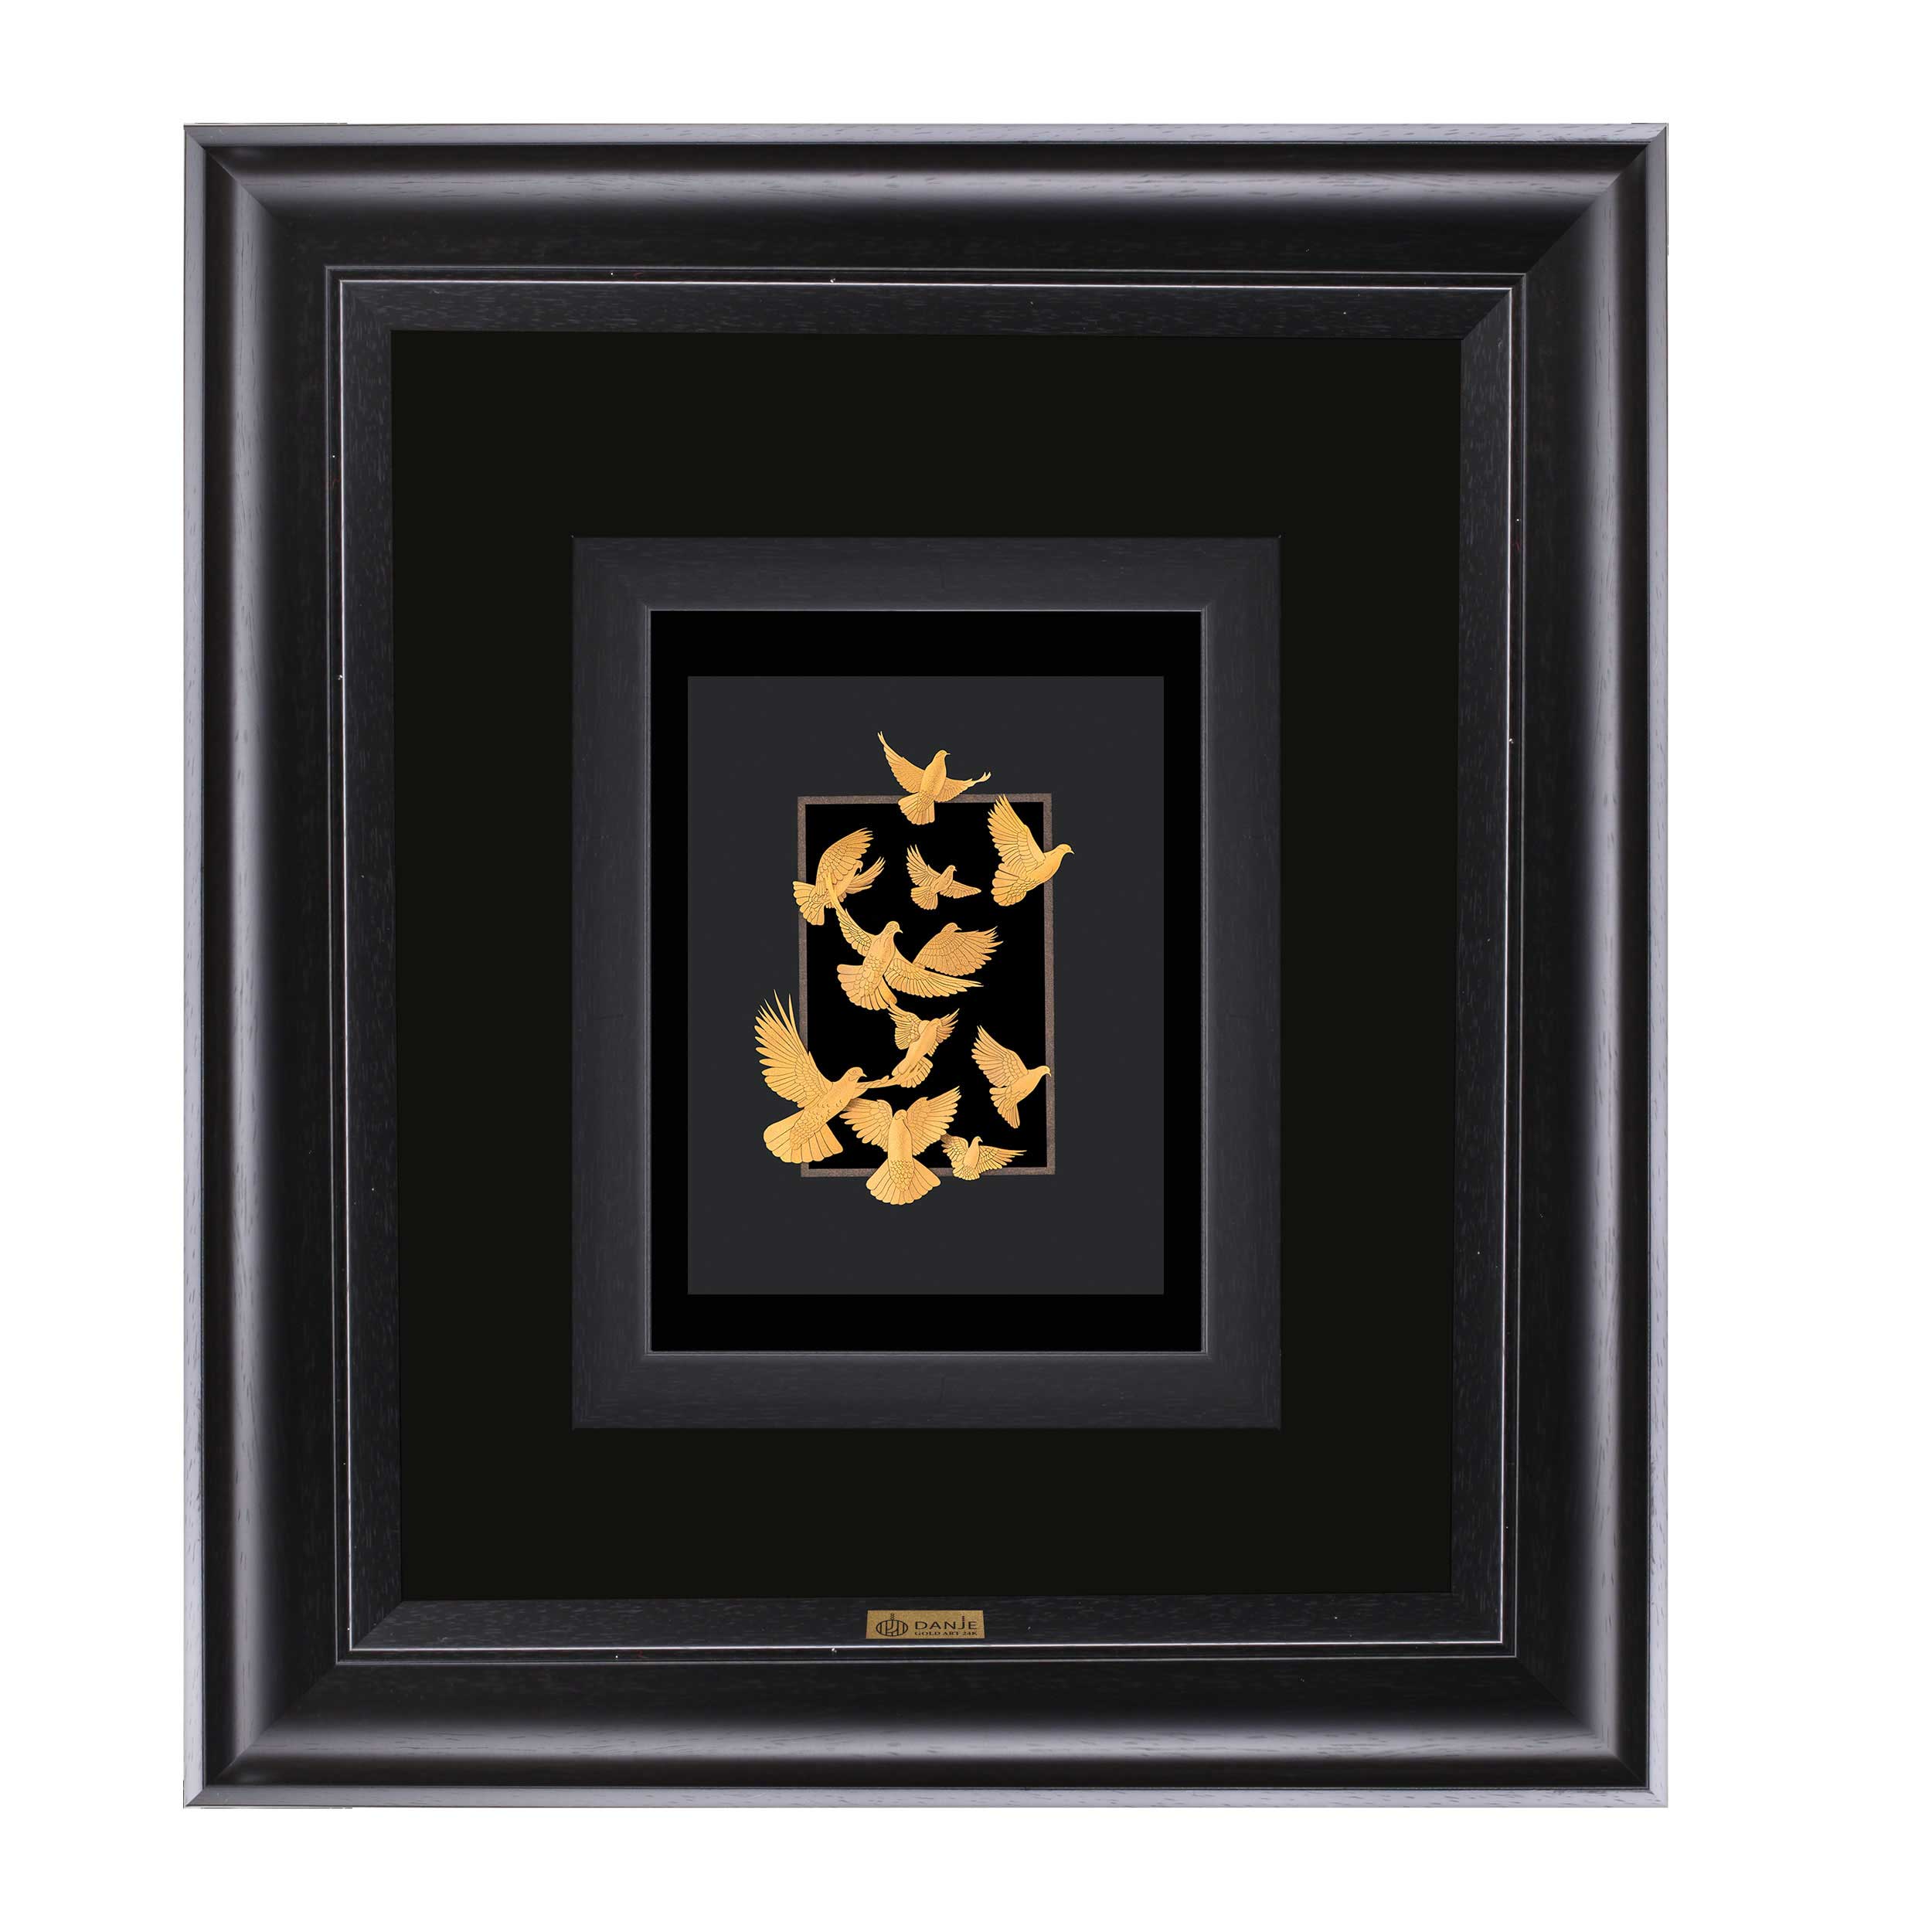 24 carat gold leaf painting with PVC frame of Danjeh brand migratory birds design